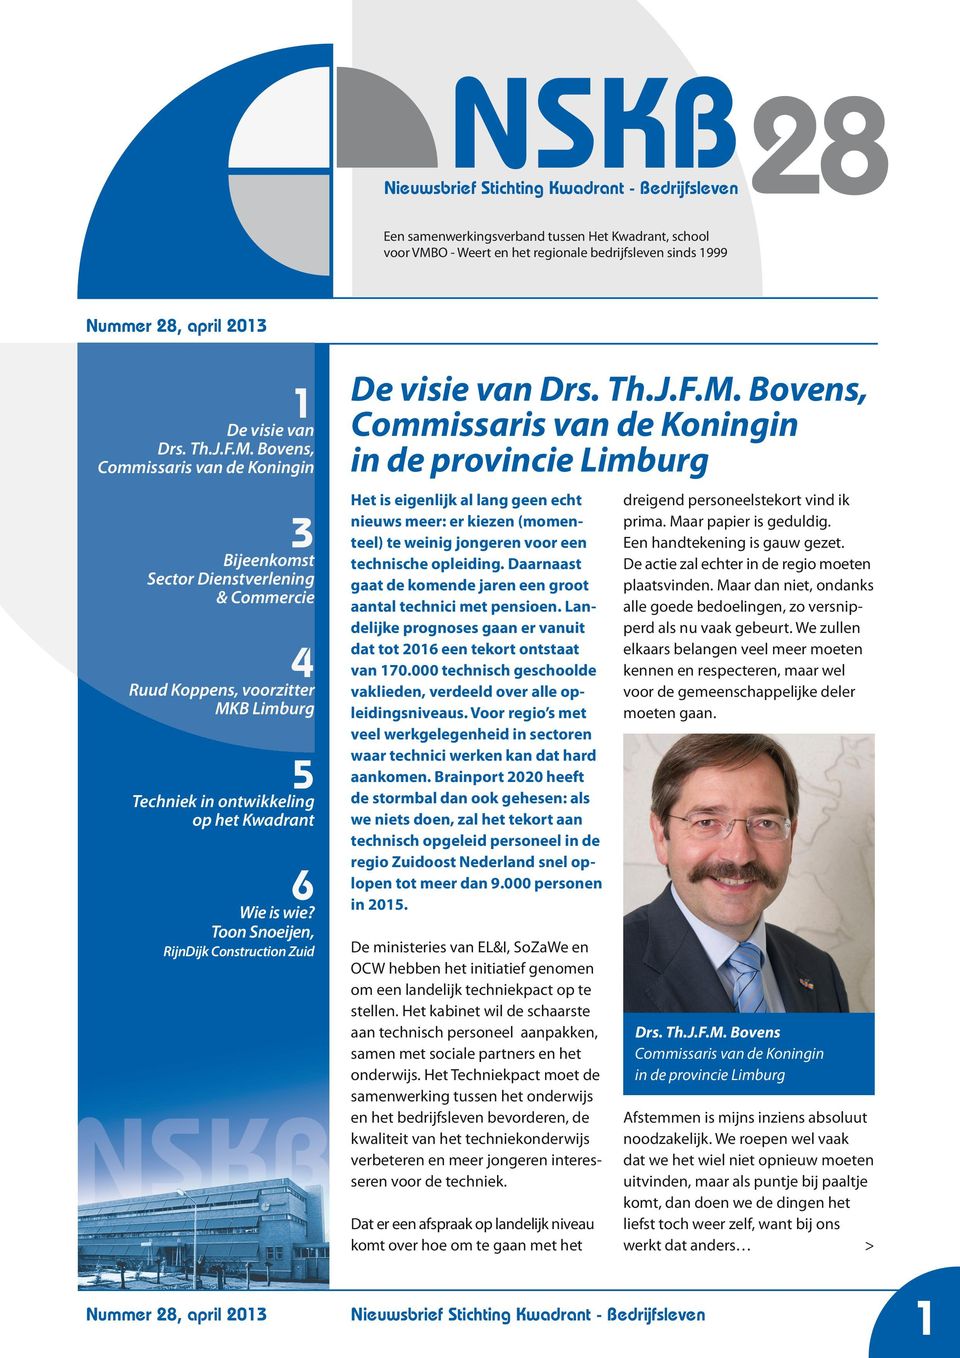 Bovens, 3 Bijeenkomst Sector Dienstverlening & Commercie 4 Ruud Koppens, voorzitter MKB Limburg 5 Techniek in ontwikkeling op het Kwadrant 6 Wie is wie?